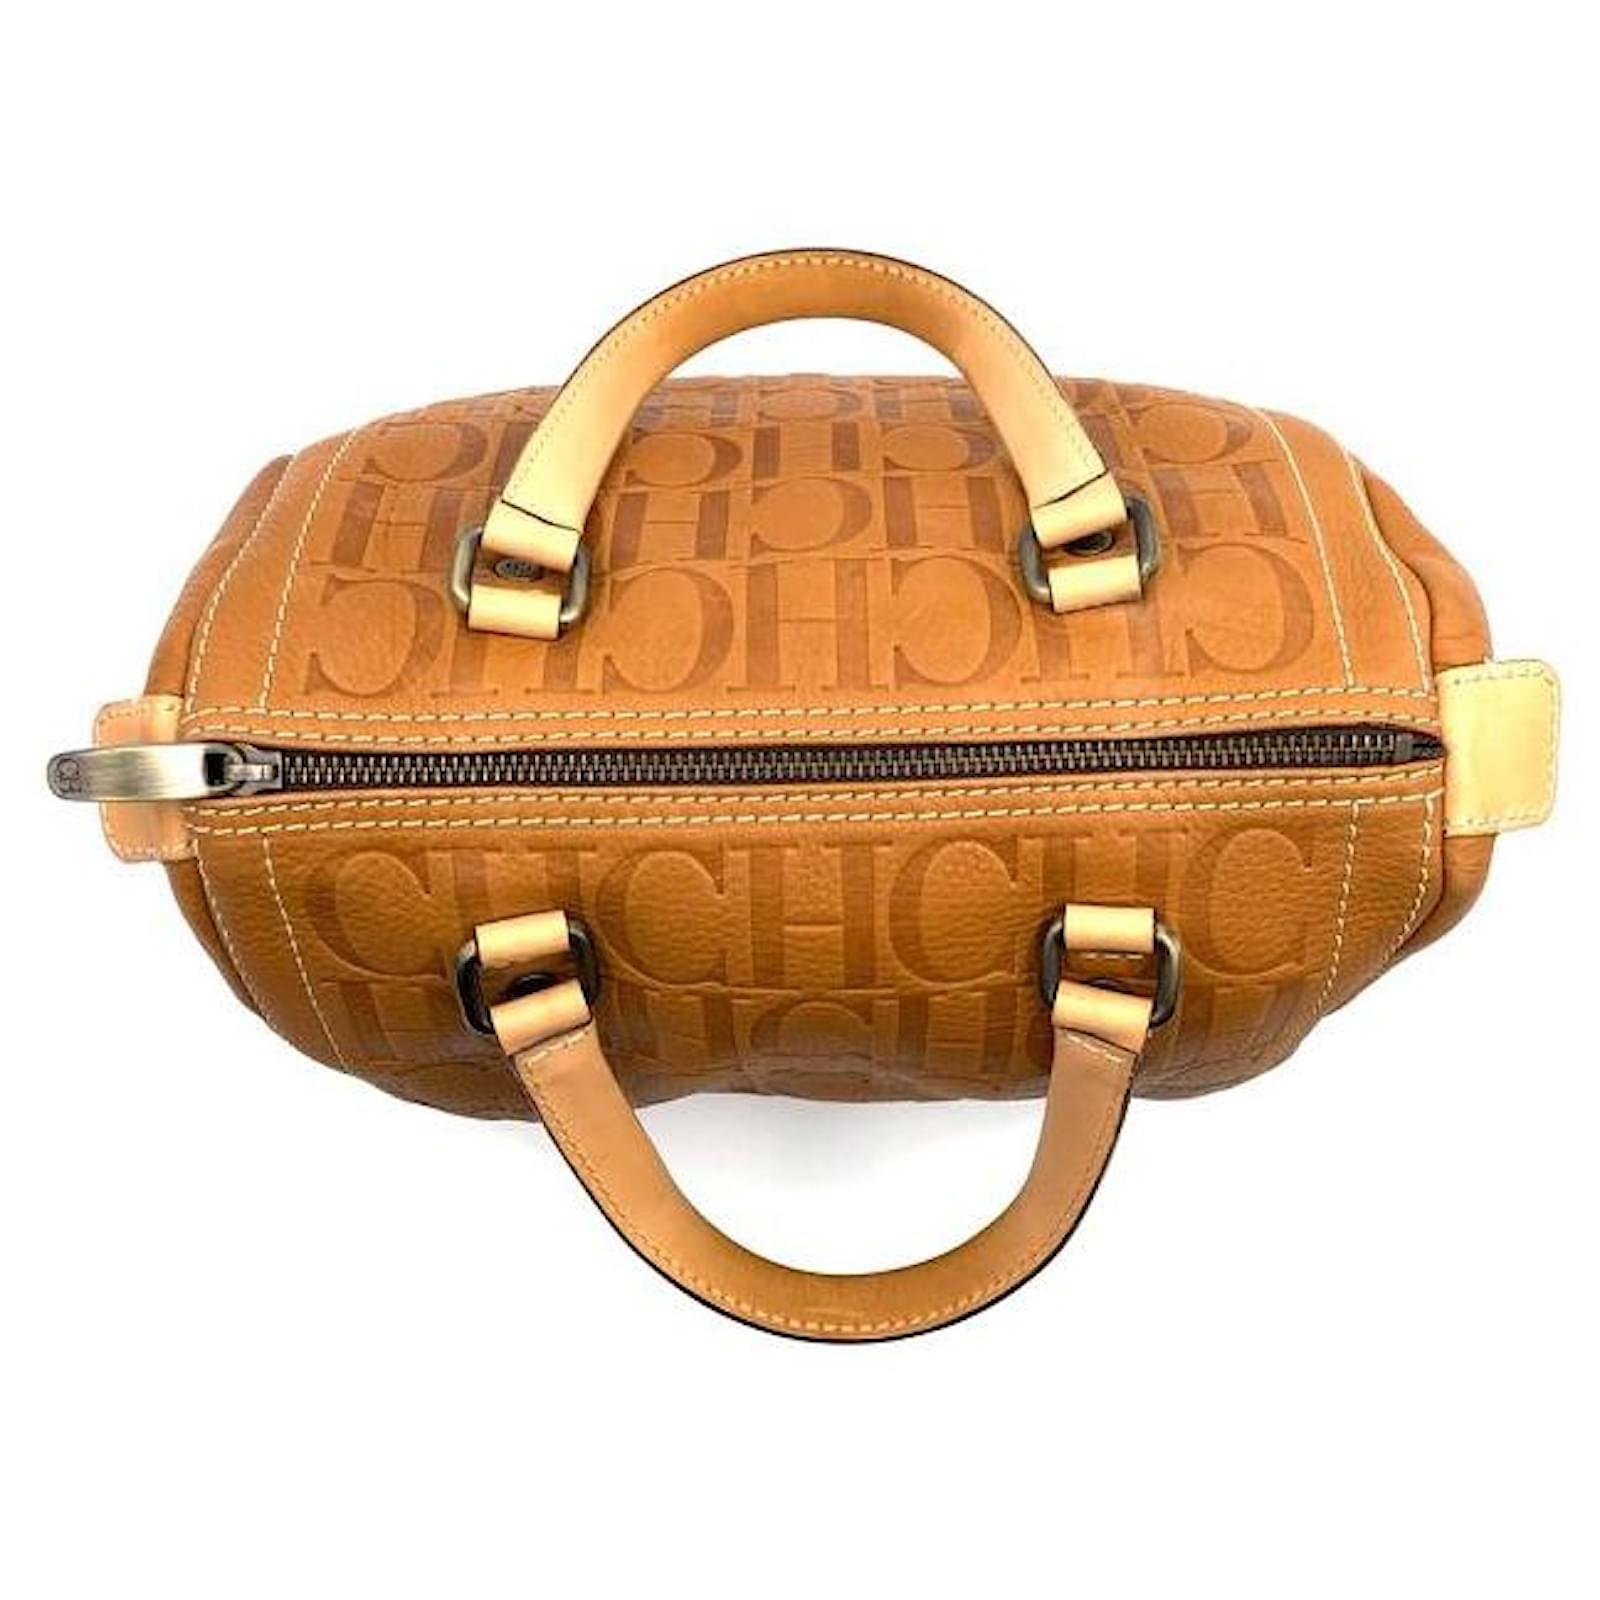 Andy 10 All Day  Large handbag cognac - CH Carolina Herrera United States